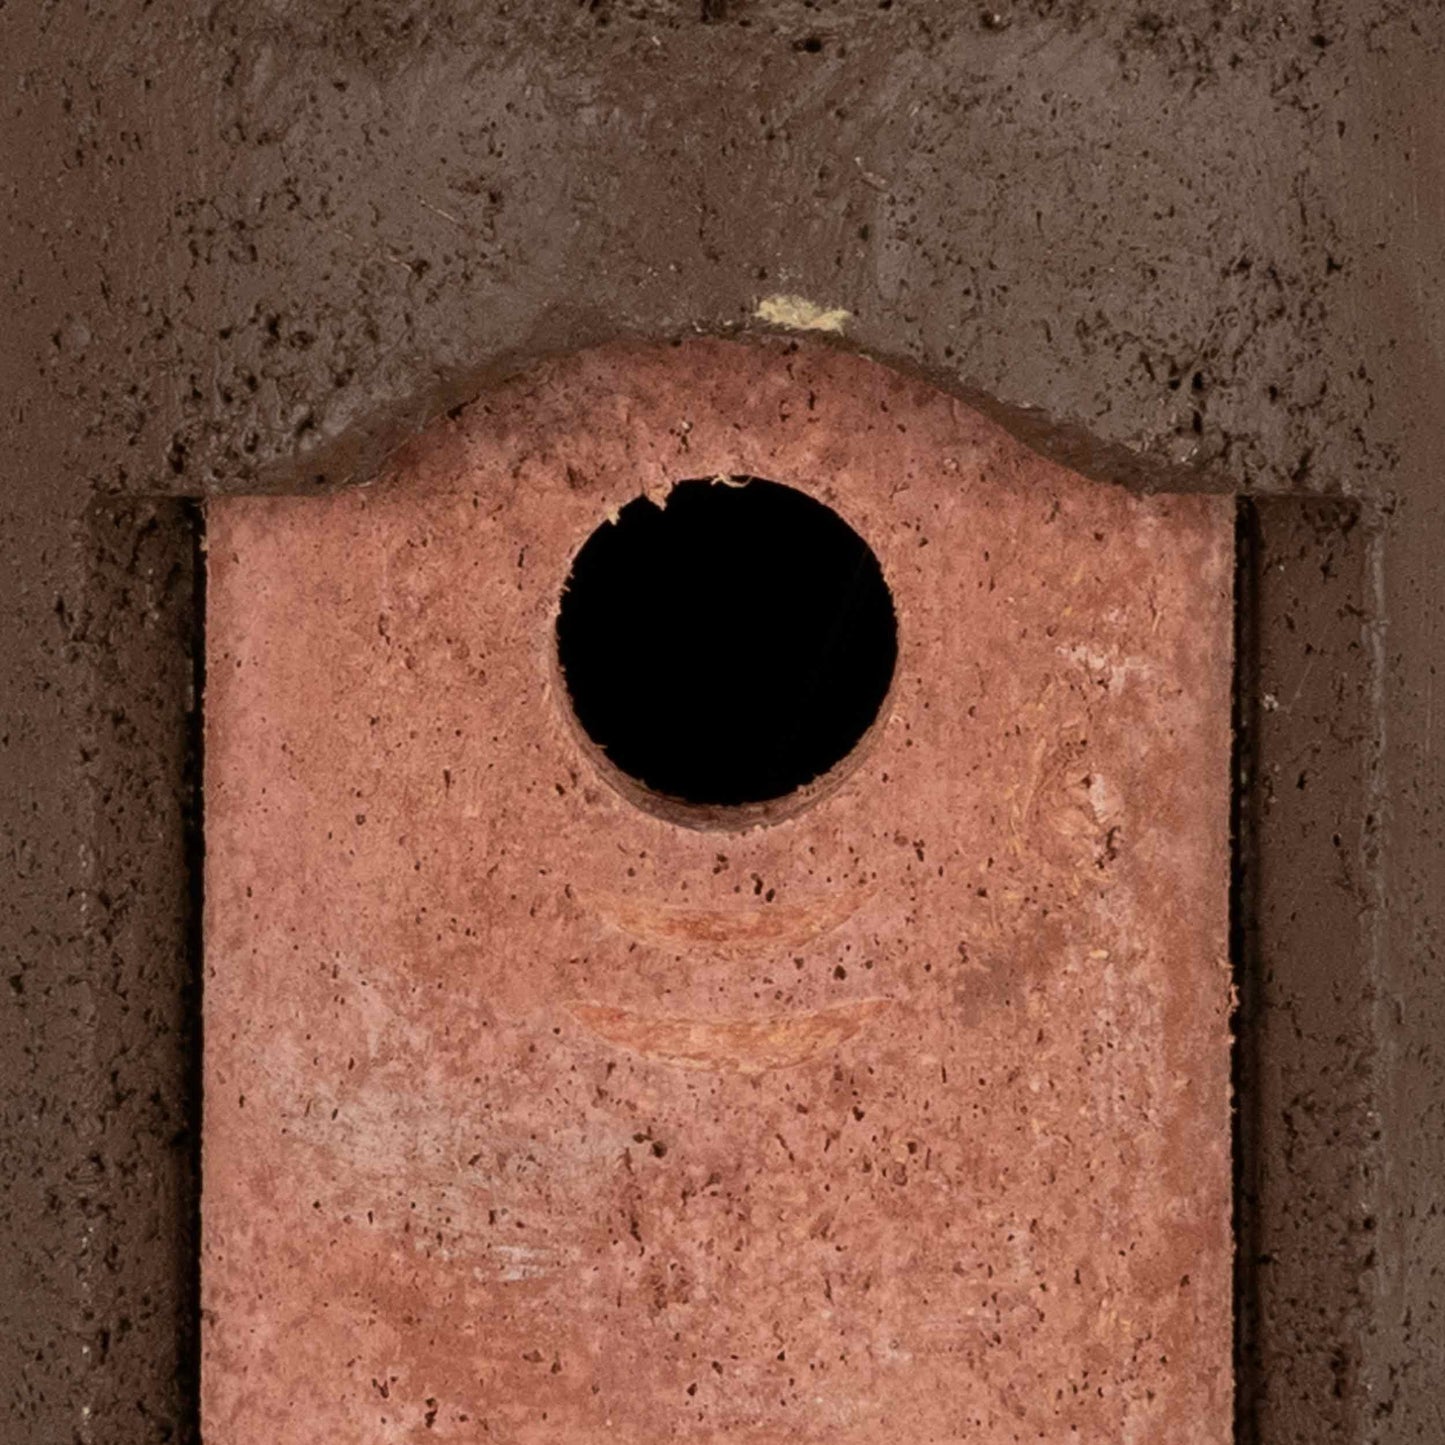 Brutalist Birdhouse- Suspended Cone- 1.25" Entrance